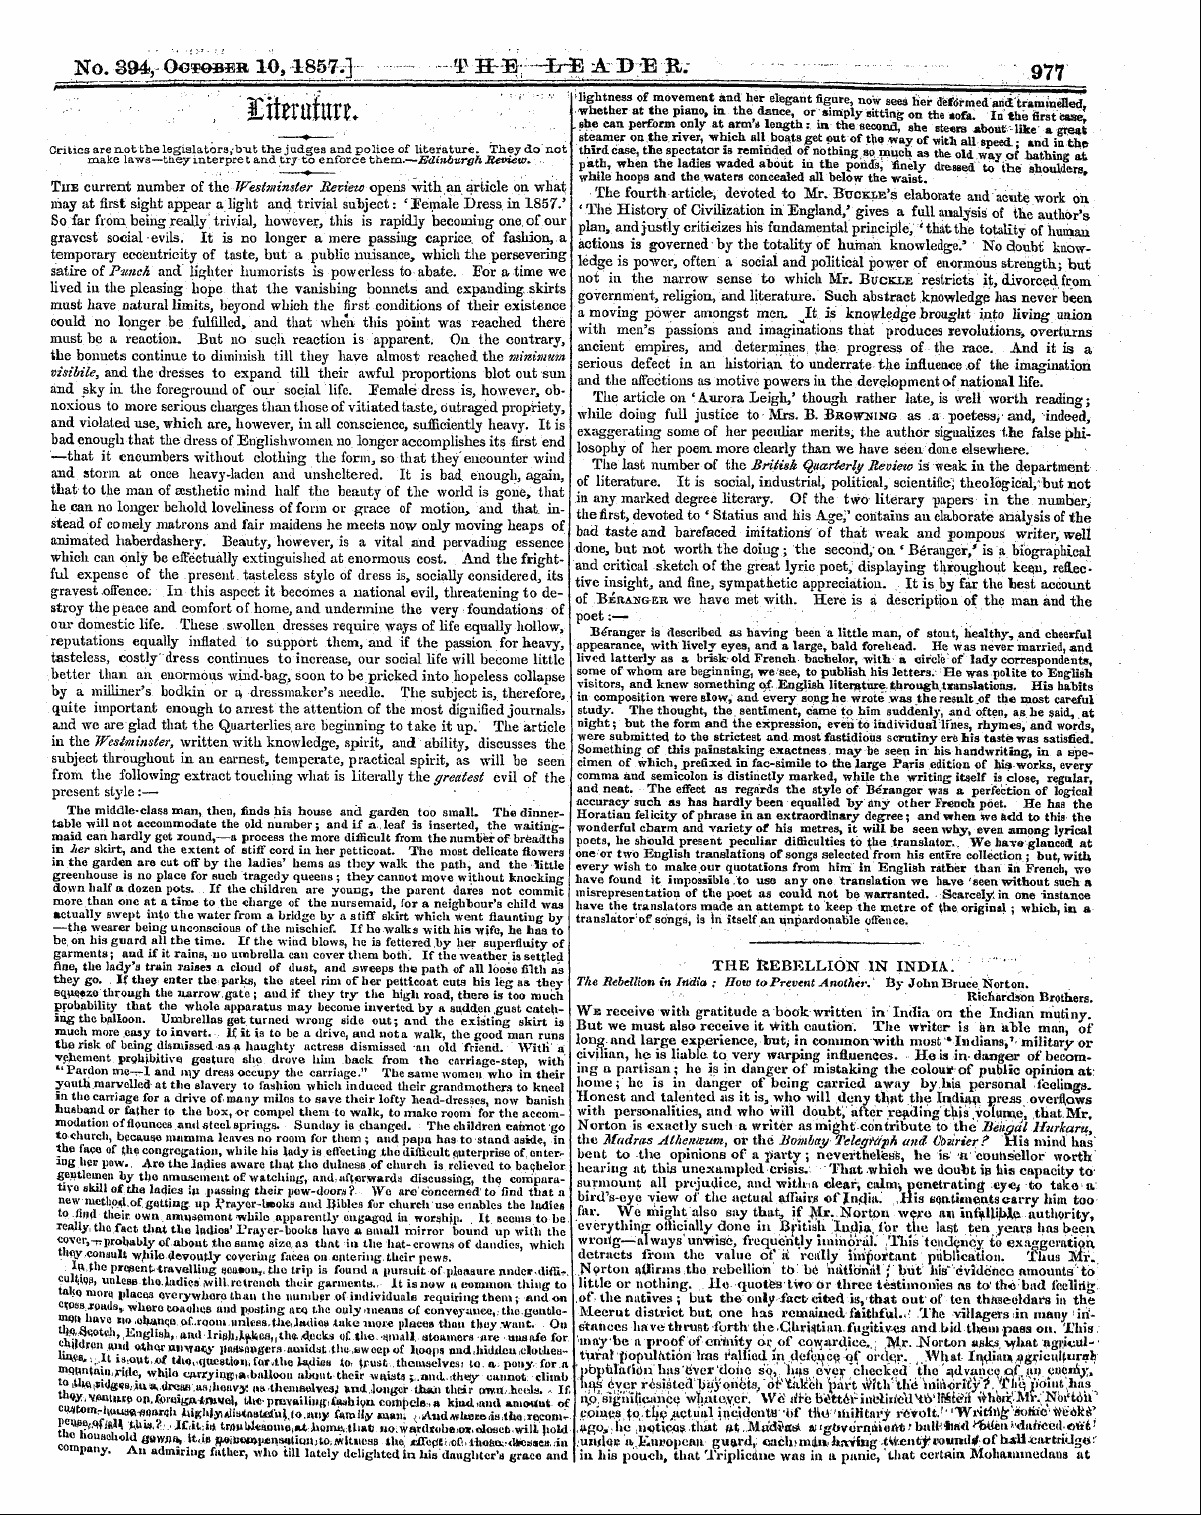 Leader (1850-1860): jS F Y, 1st edition - ~^., £ Illmlltutl ' ?